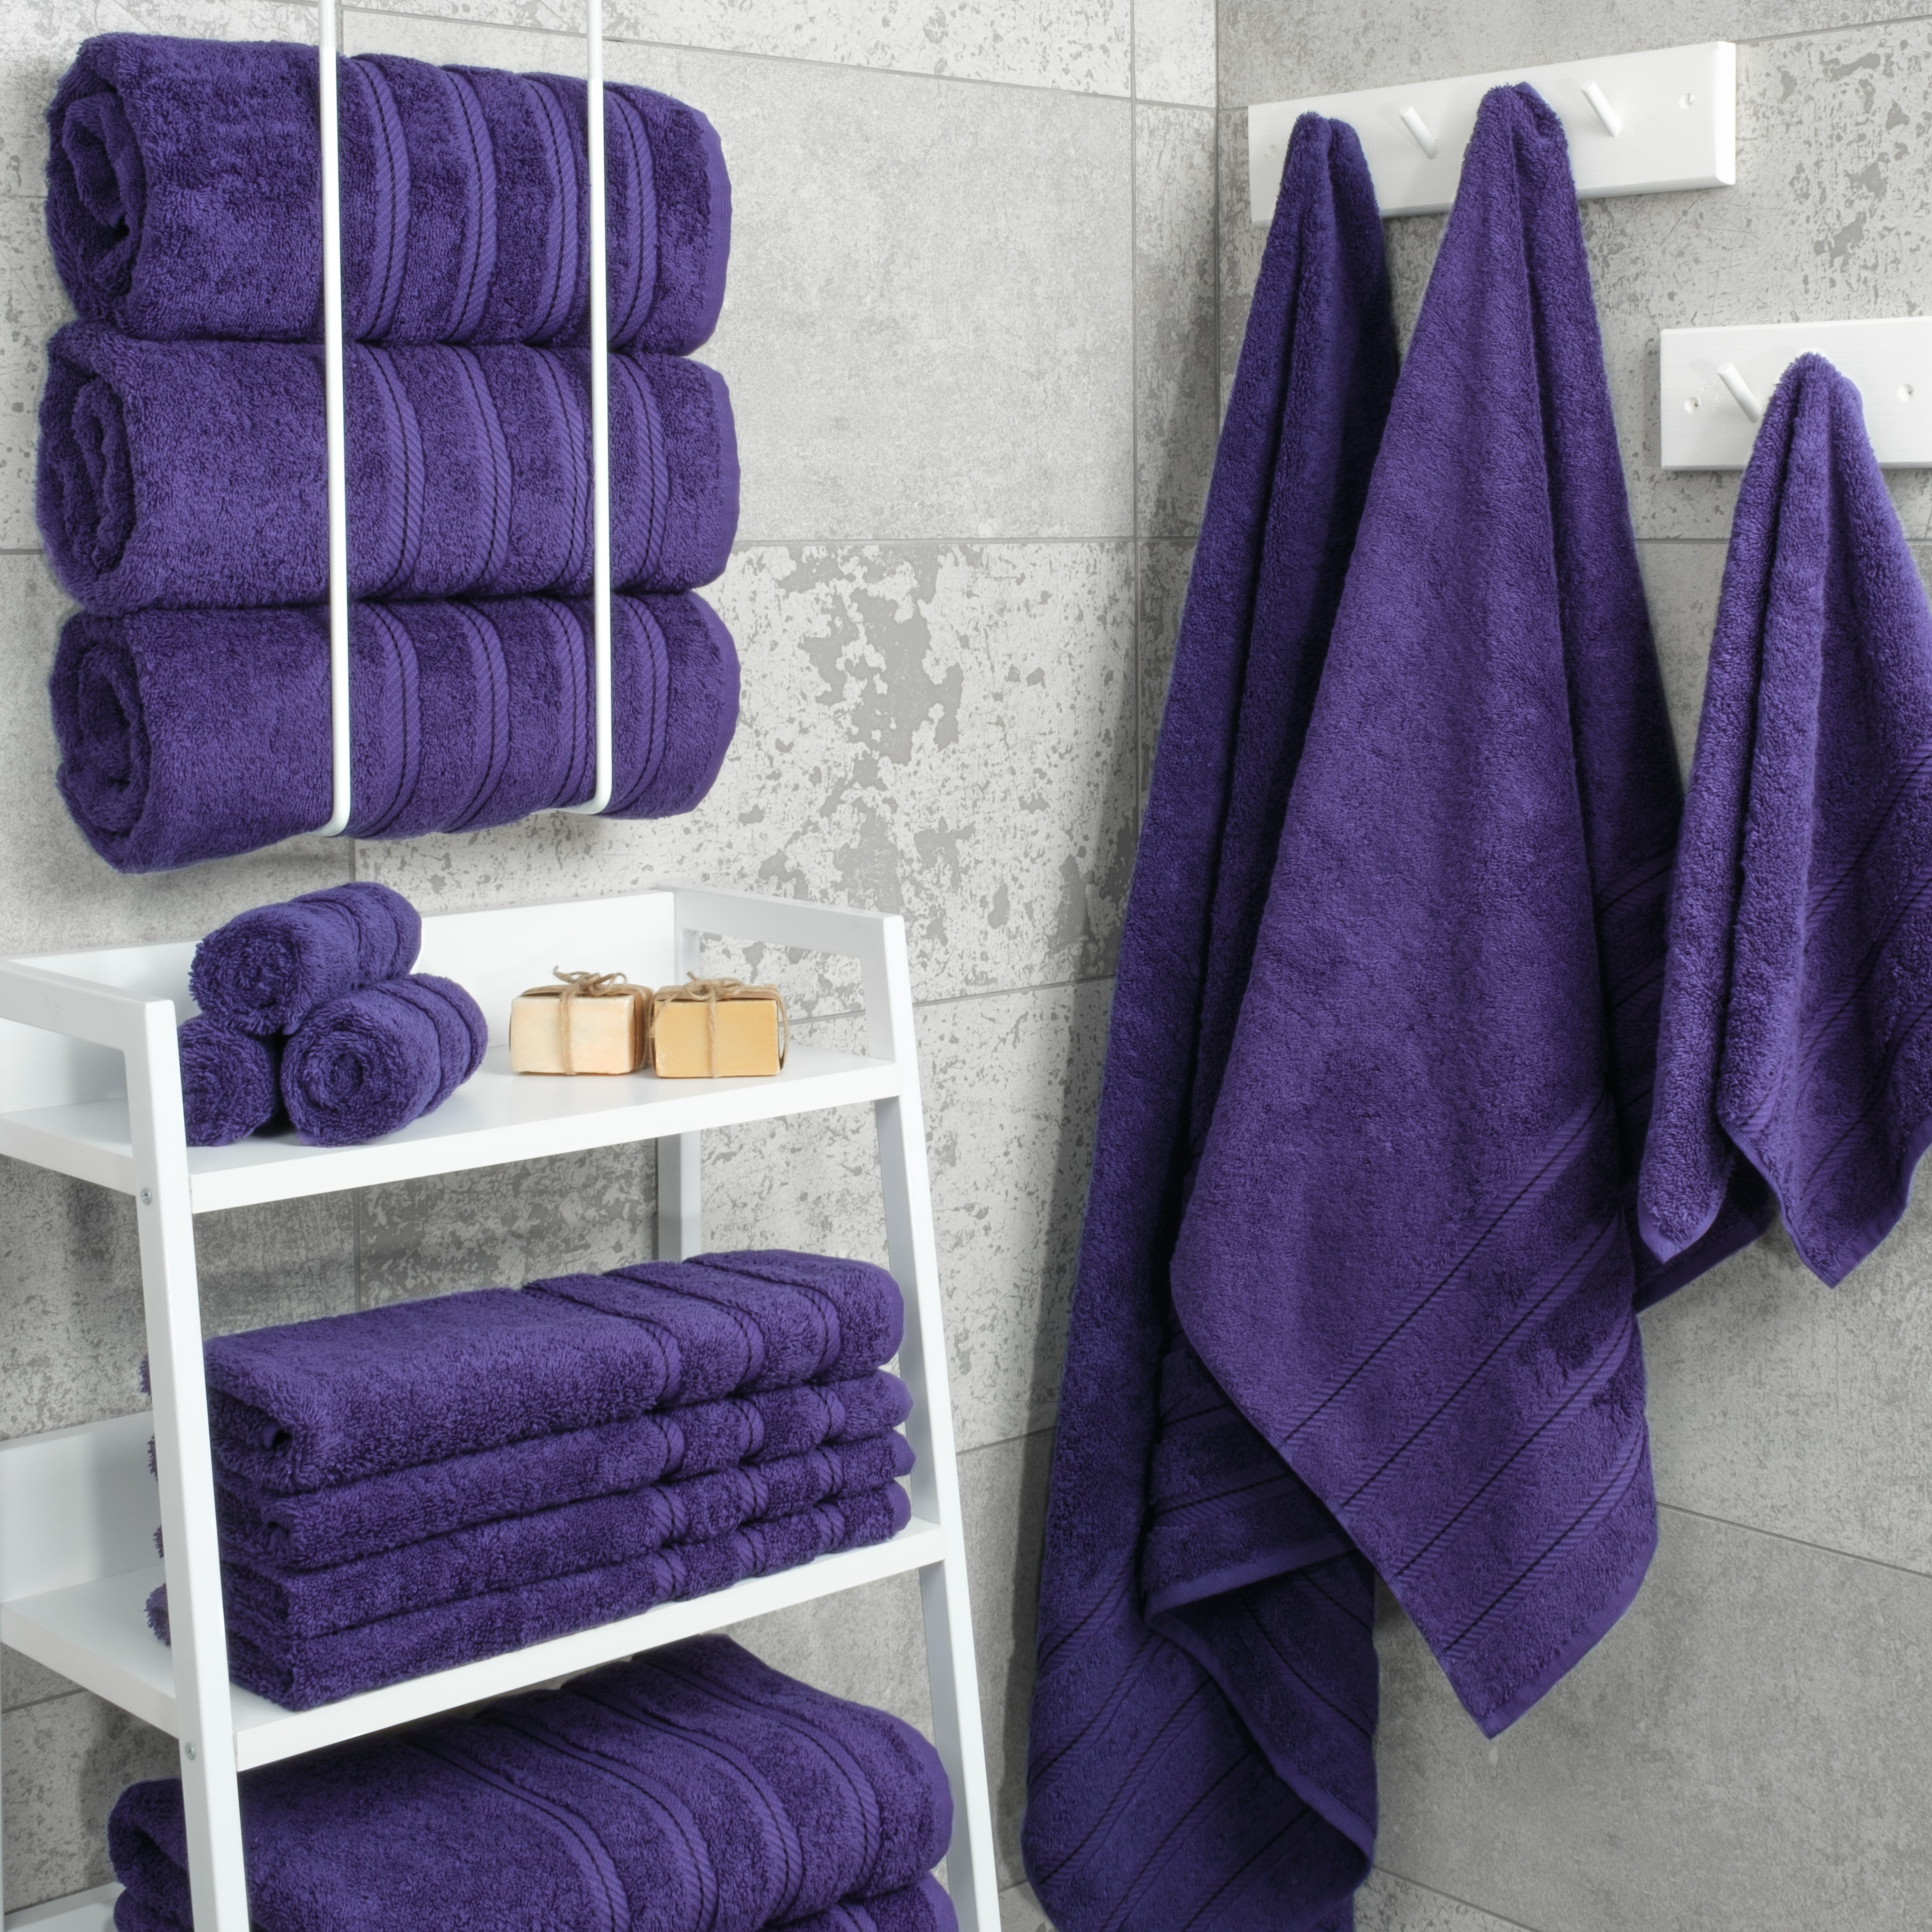 https://ak1.ostkcdn.com/images/products/is/images/direct/5c3e838d11ab2012d6bf0587756faa4fffe7d845/American-Soft-Linen-Turkish-Cotton-4-Piece-Bath-Towel-Set.jpg